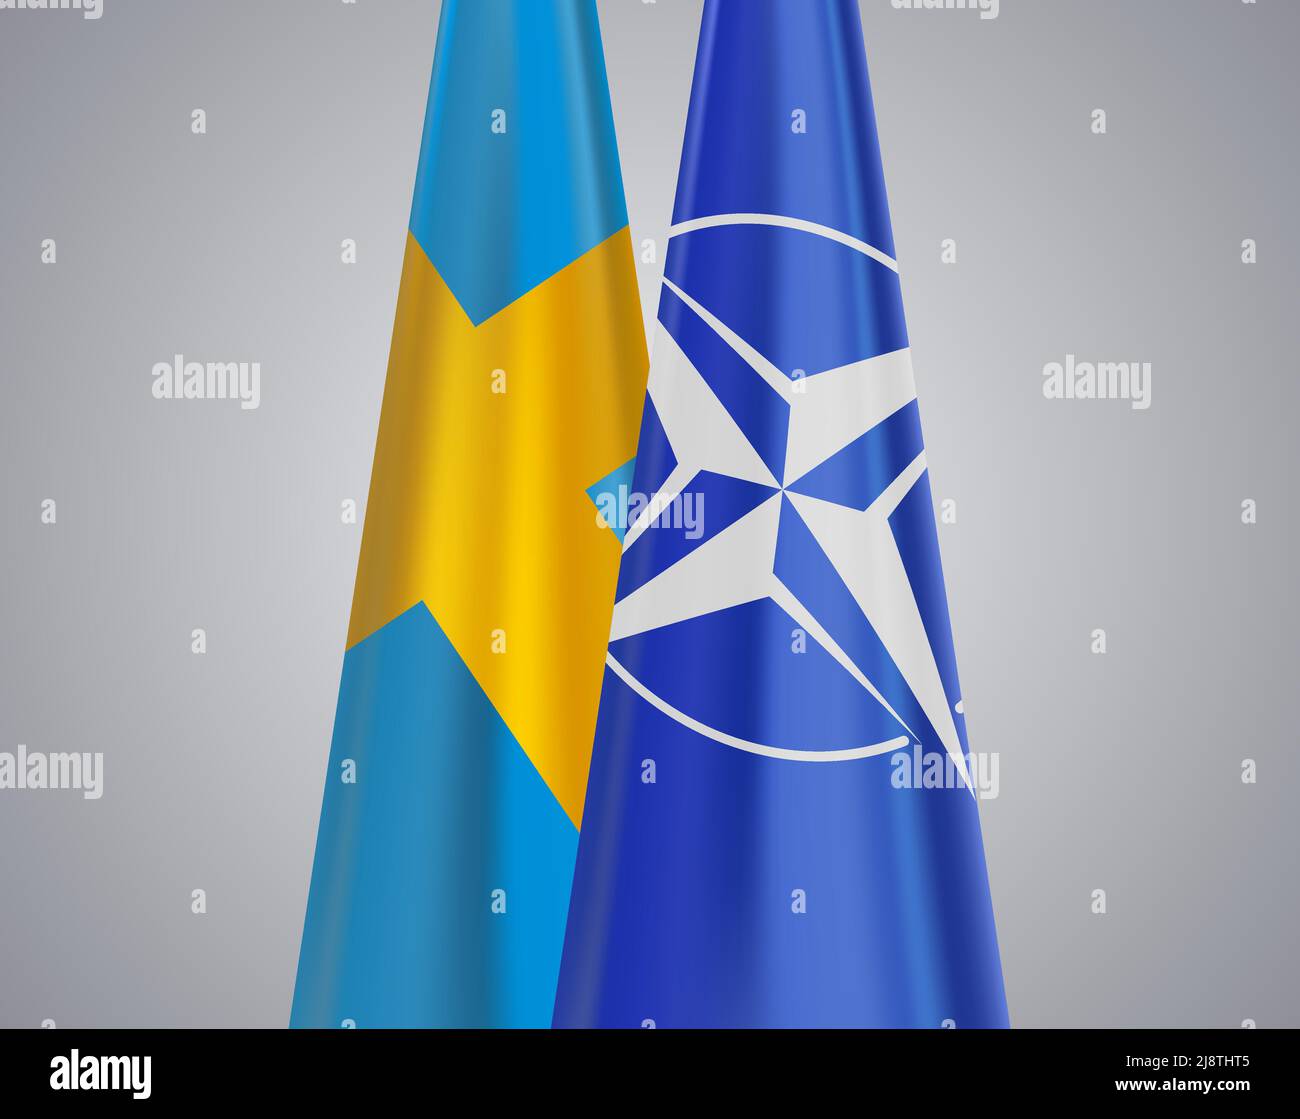 Sweddish And Nato Flags Conceptual Illustration Stock Vector Image And Art Alamy 6247